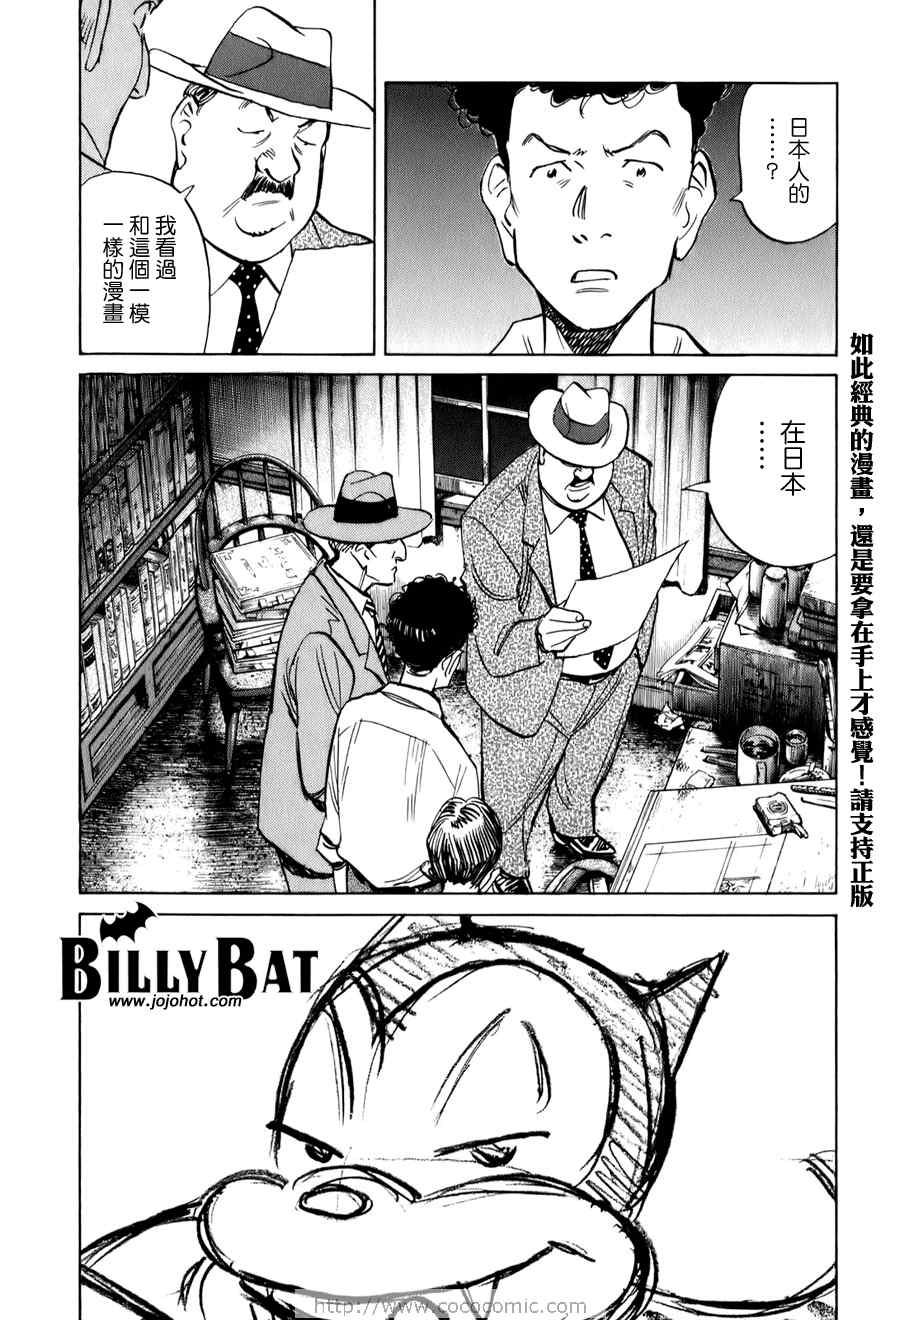 Billy_Bat - 第2话 - 4